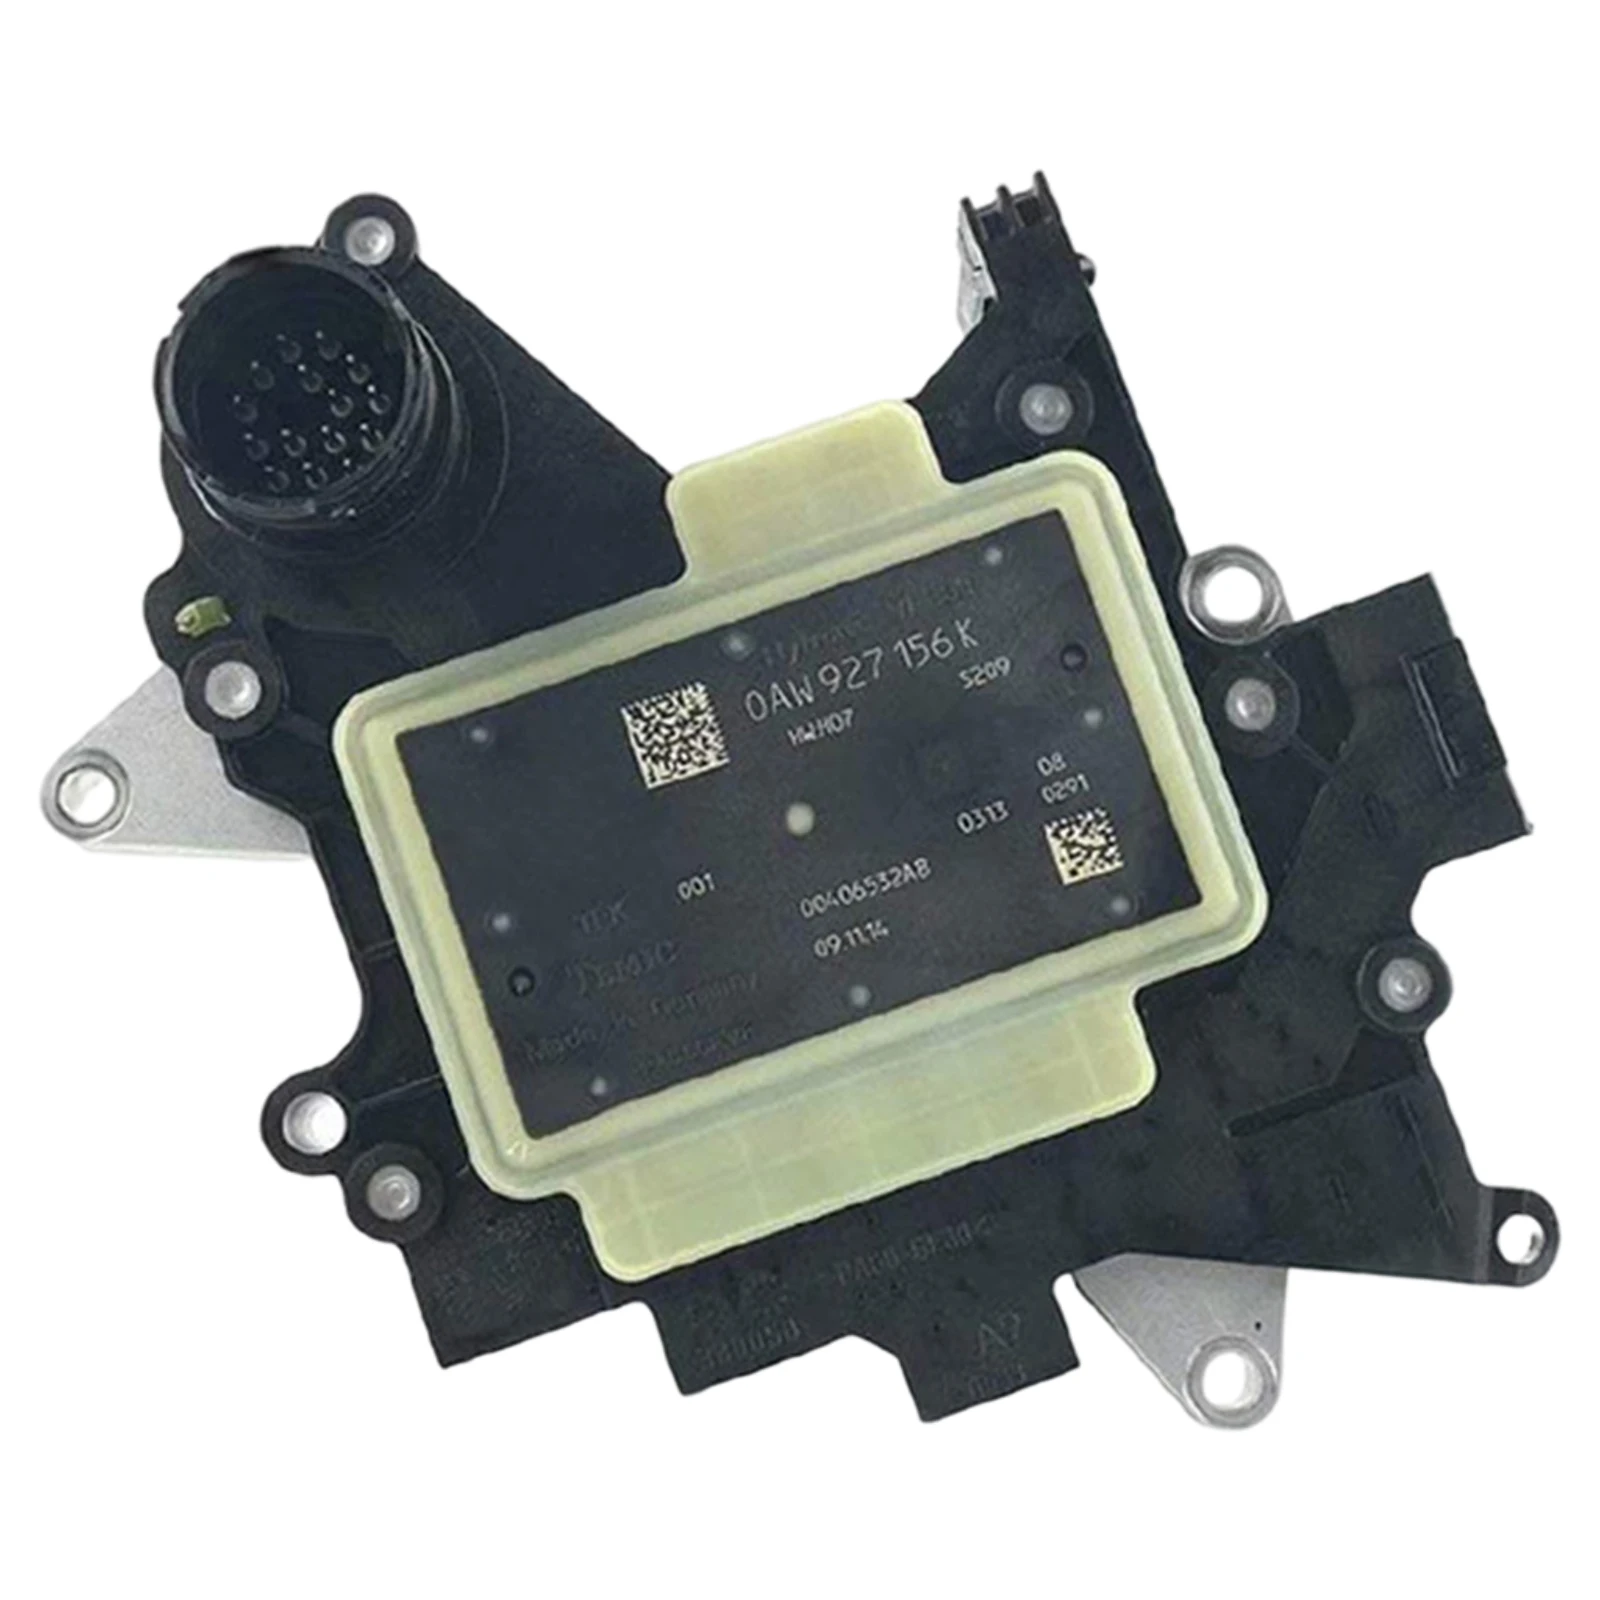  Transmission Tcu Tcm 0AW Cvt Automatic Transmission Control Unit Durable Metal for Audi A6 Car Parts